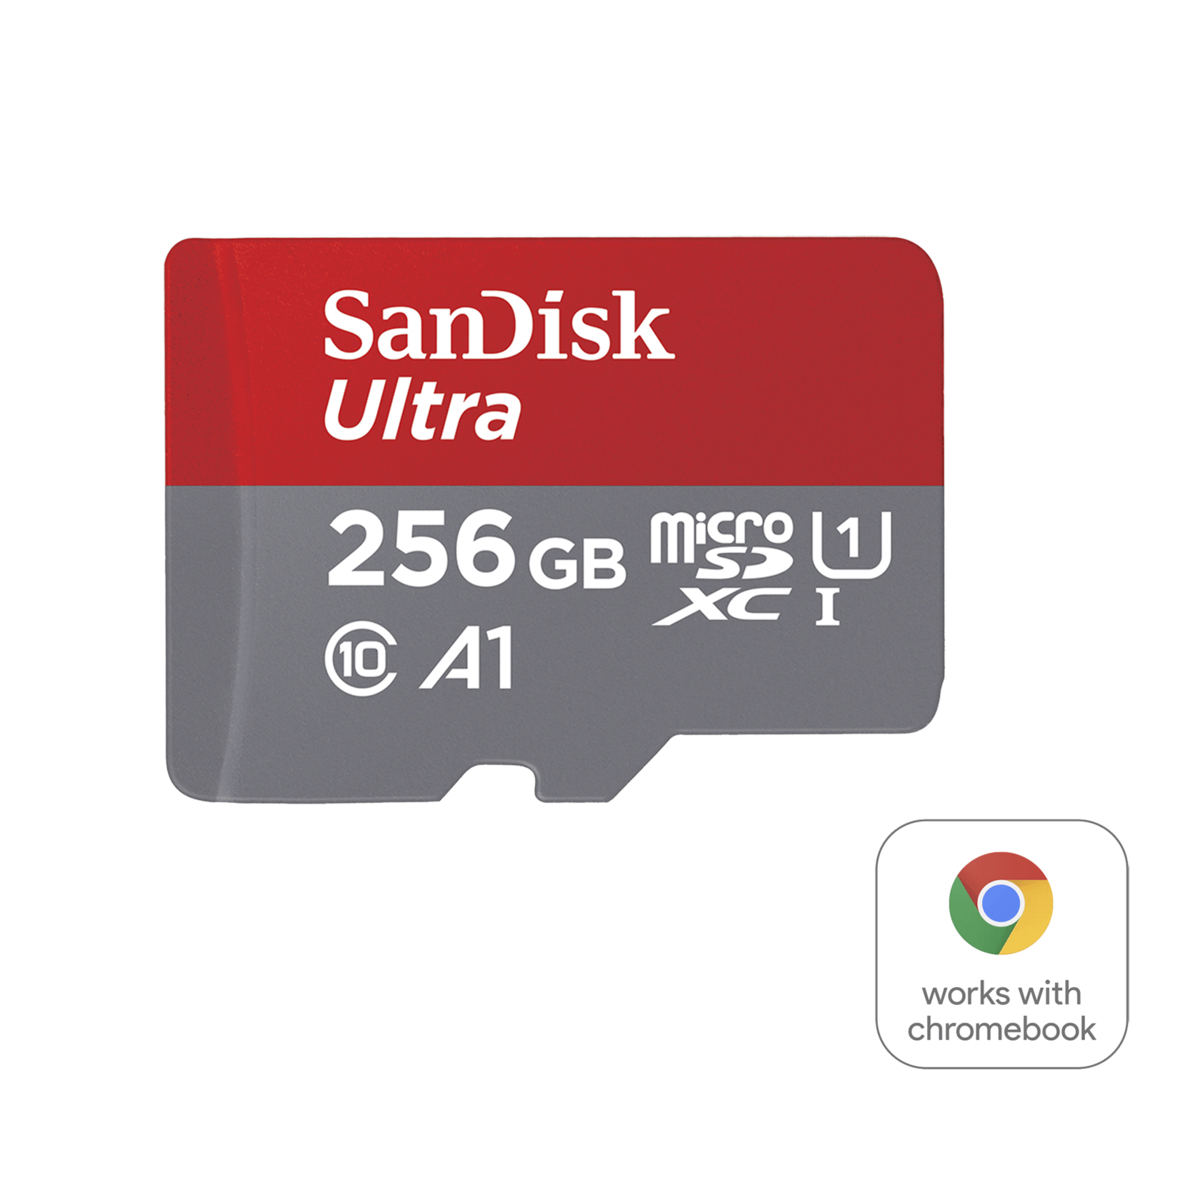 Review: SanDisk Ultra 256GB MicroSD